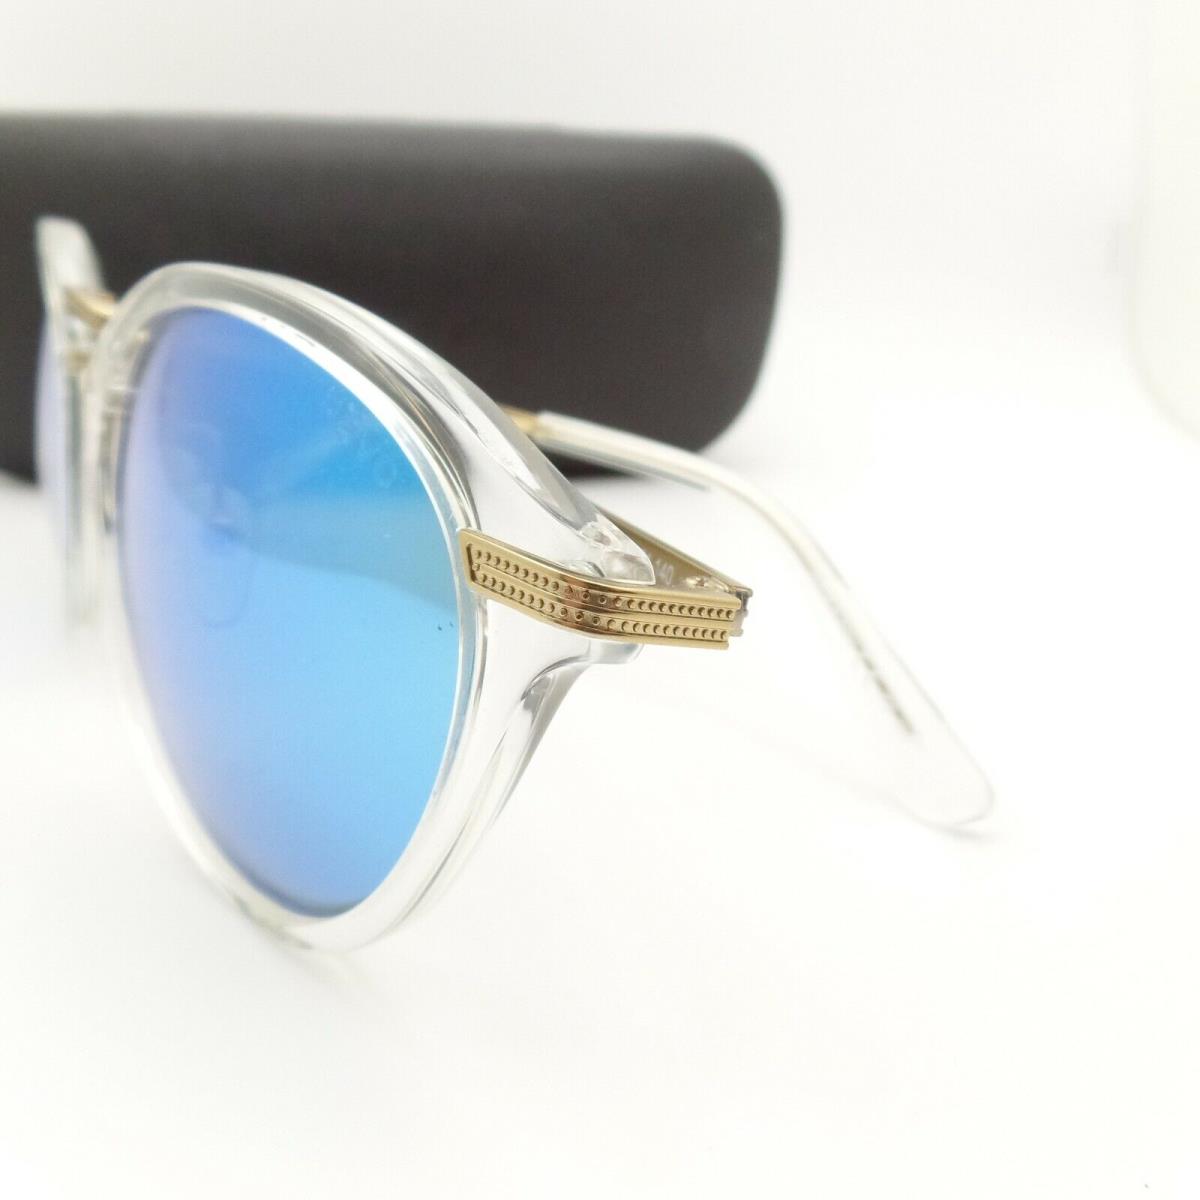 Revo sunglasses Quinn - Crystal Pale Gold Filigree Frame, Blue Water Lens